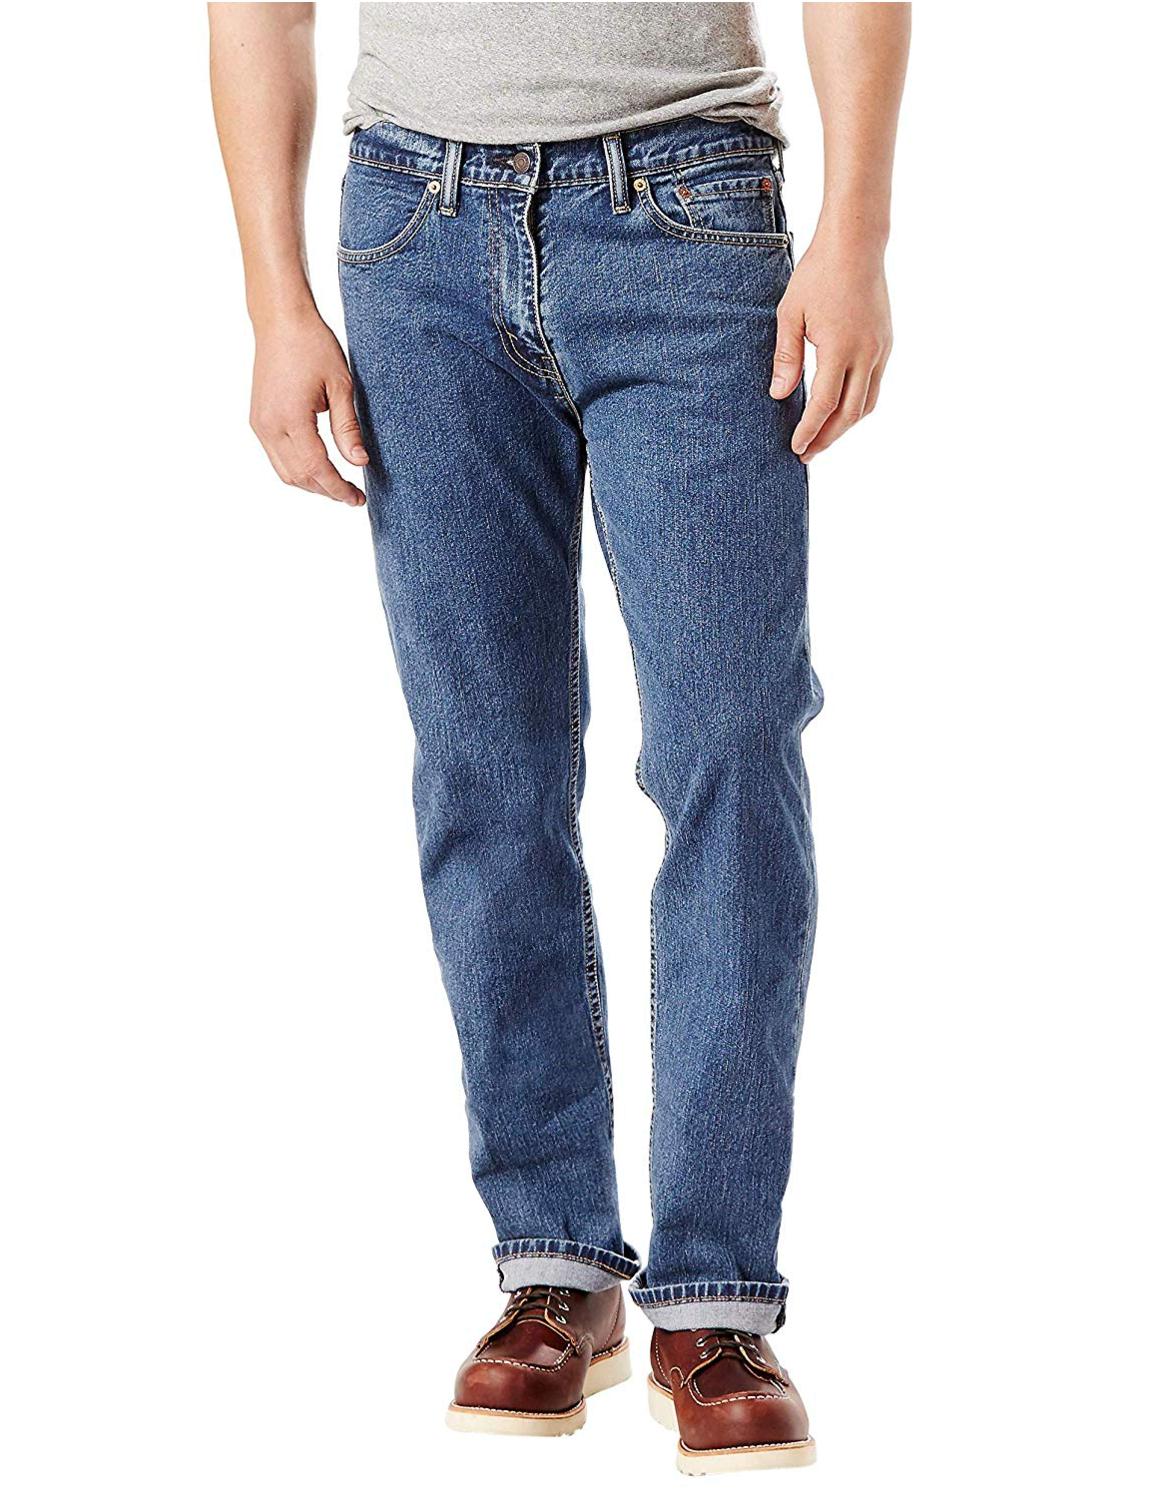 Levi's Men's 505 Regular Fit Jeans, Stonewash - Stretch,, Blue, Size